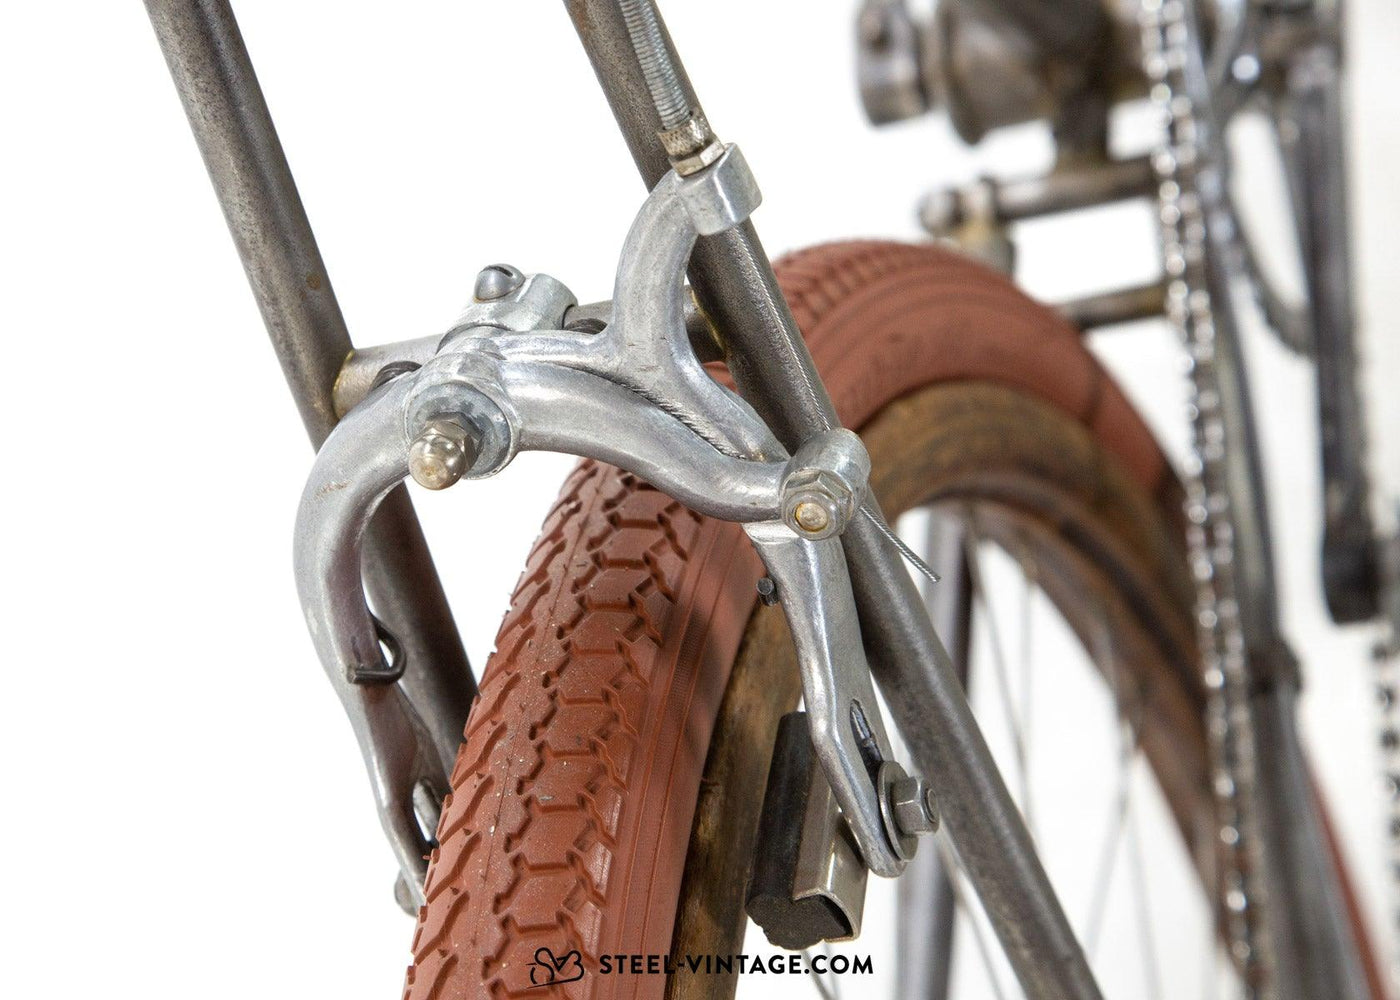 Original French Full-Suspension Randonneur 1940s - Steel Vintage Bikes